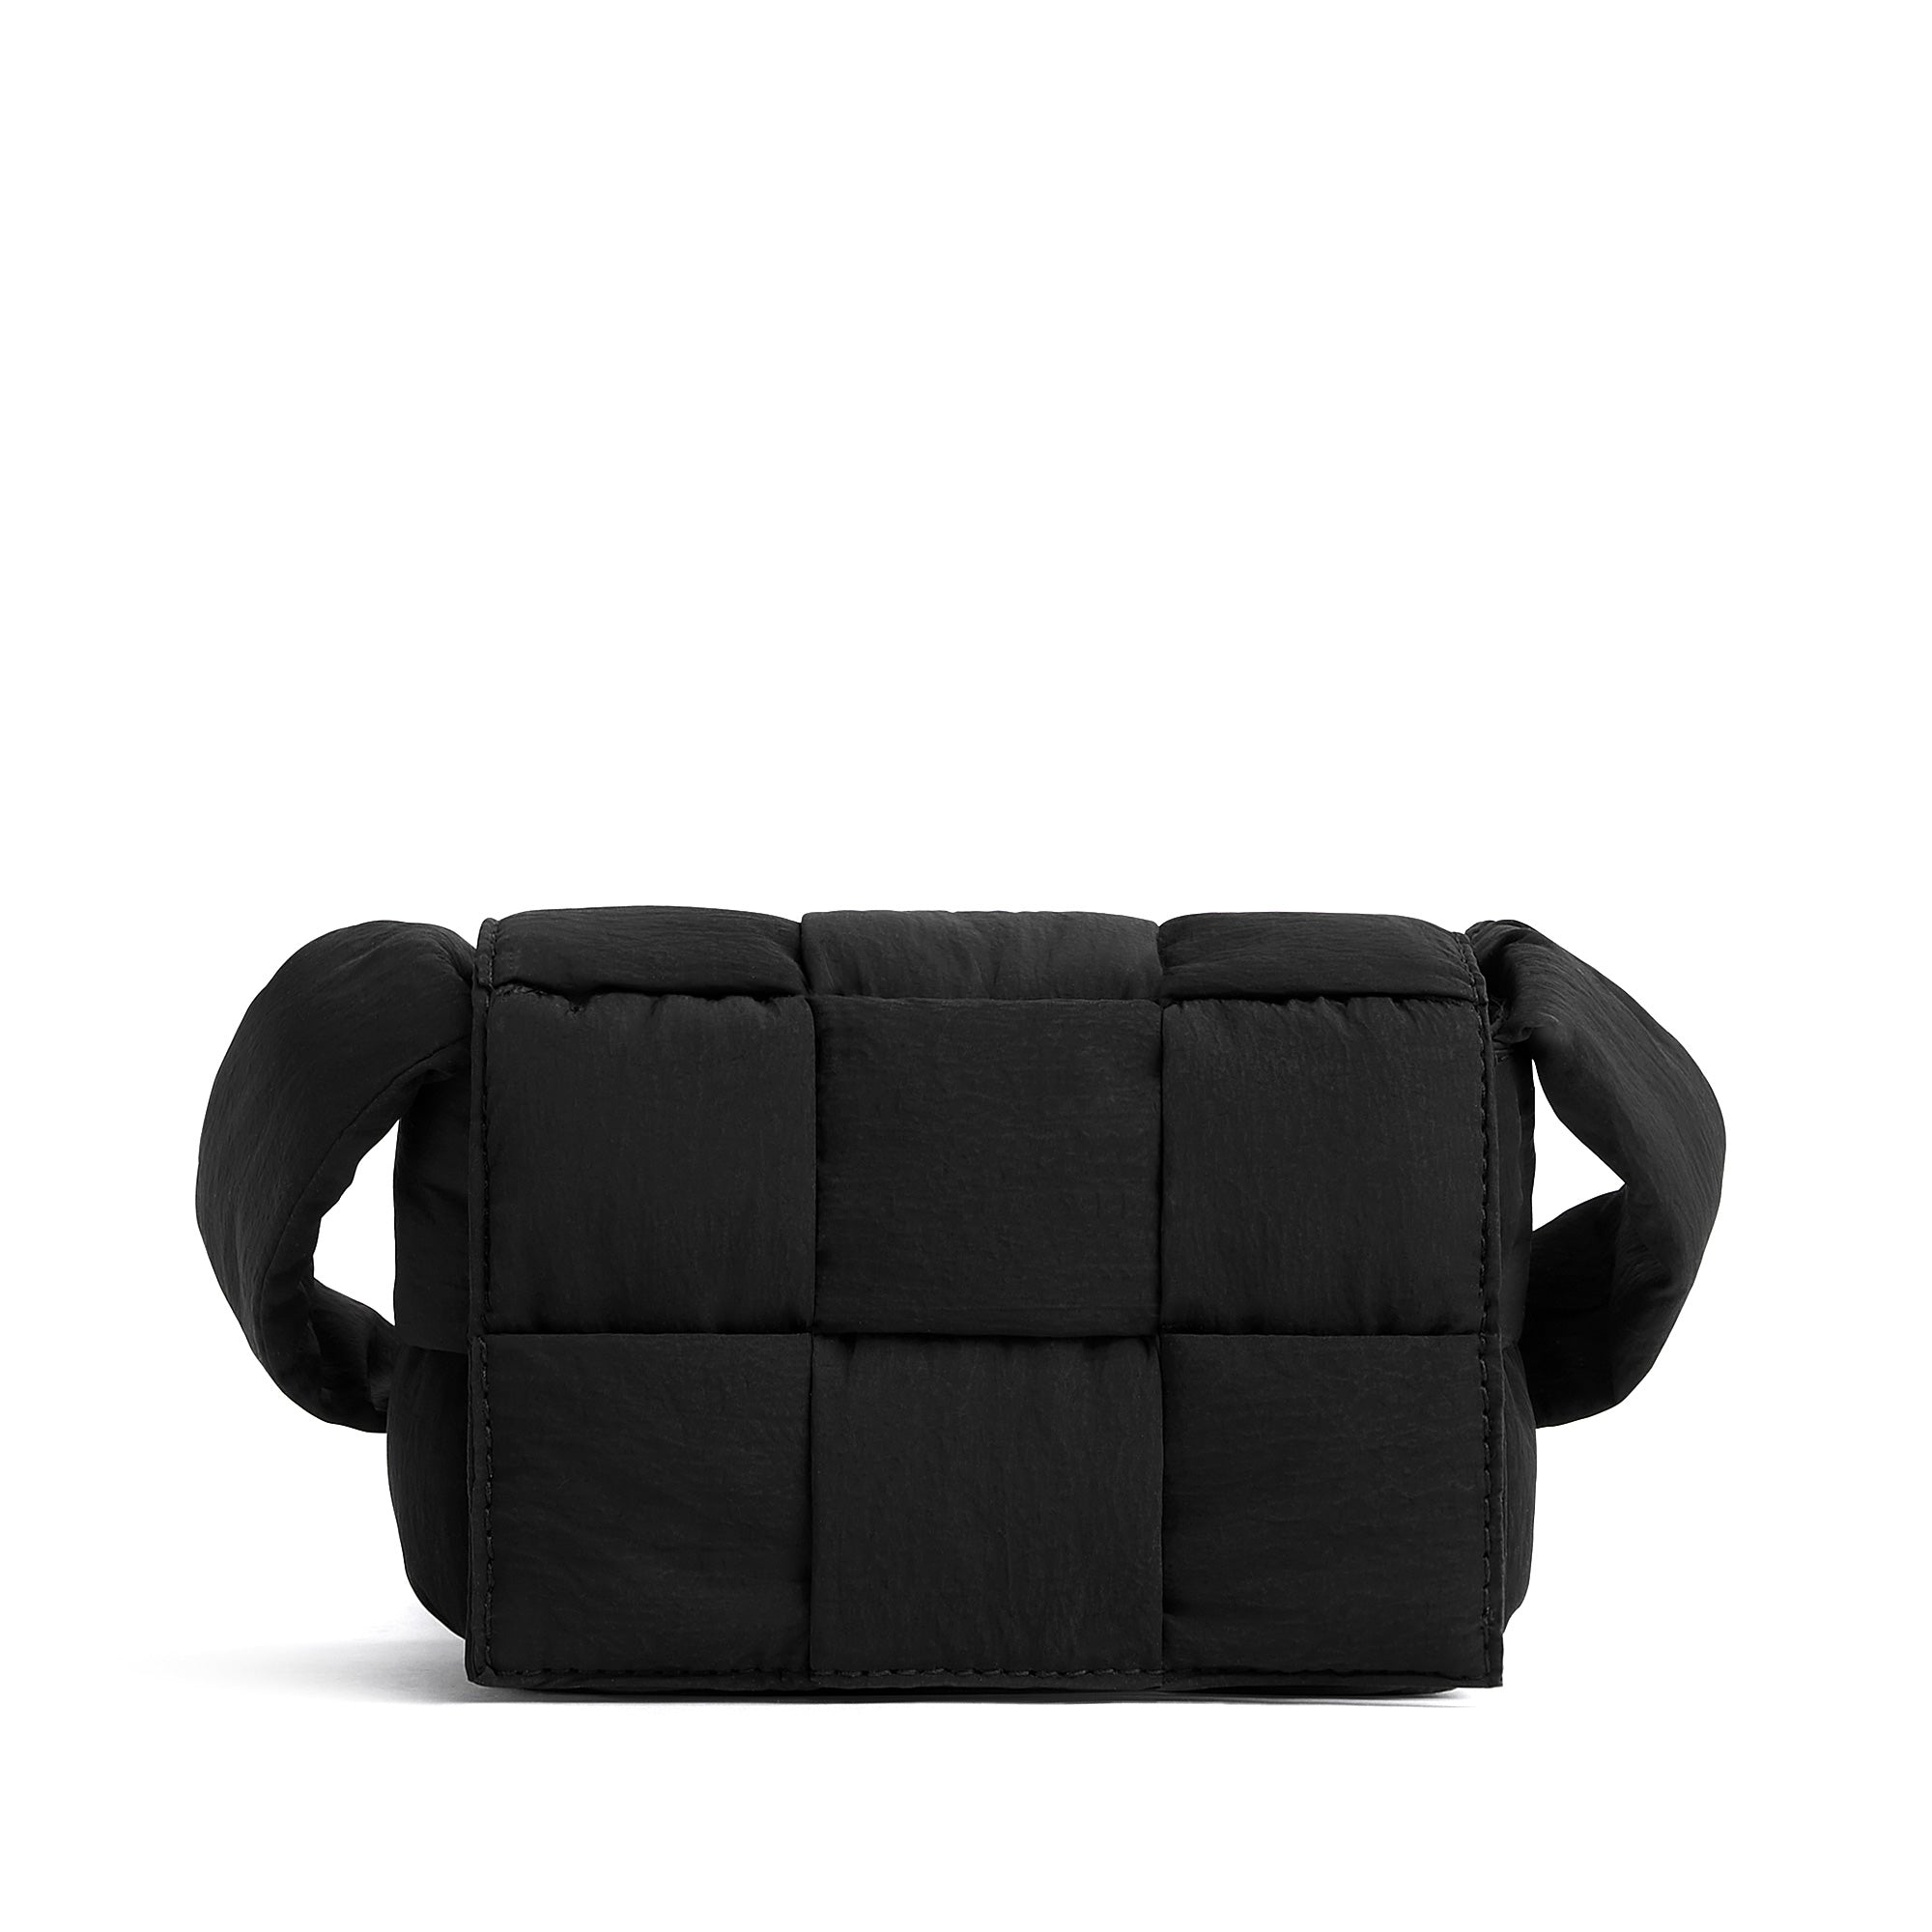 Cassette mini padded intrecciato leather shoulder bag